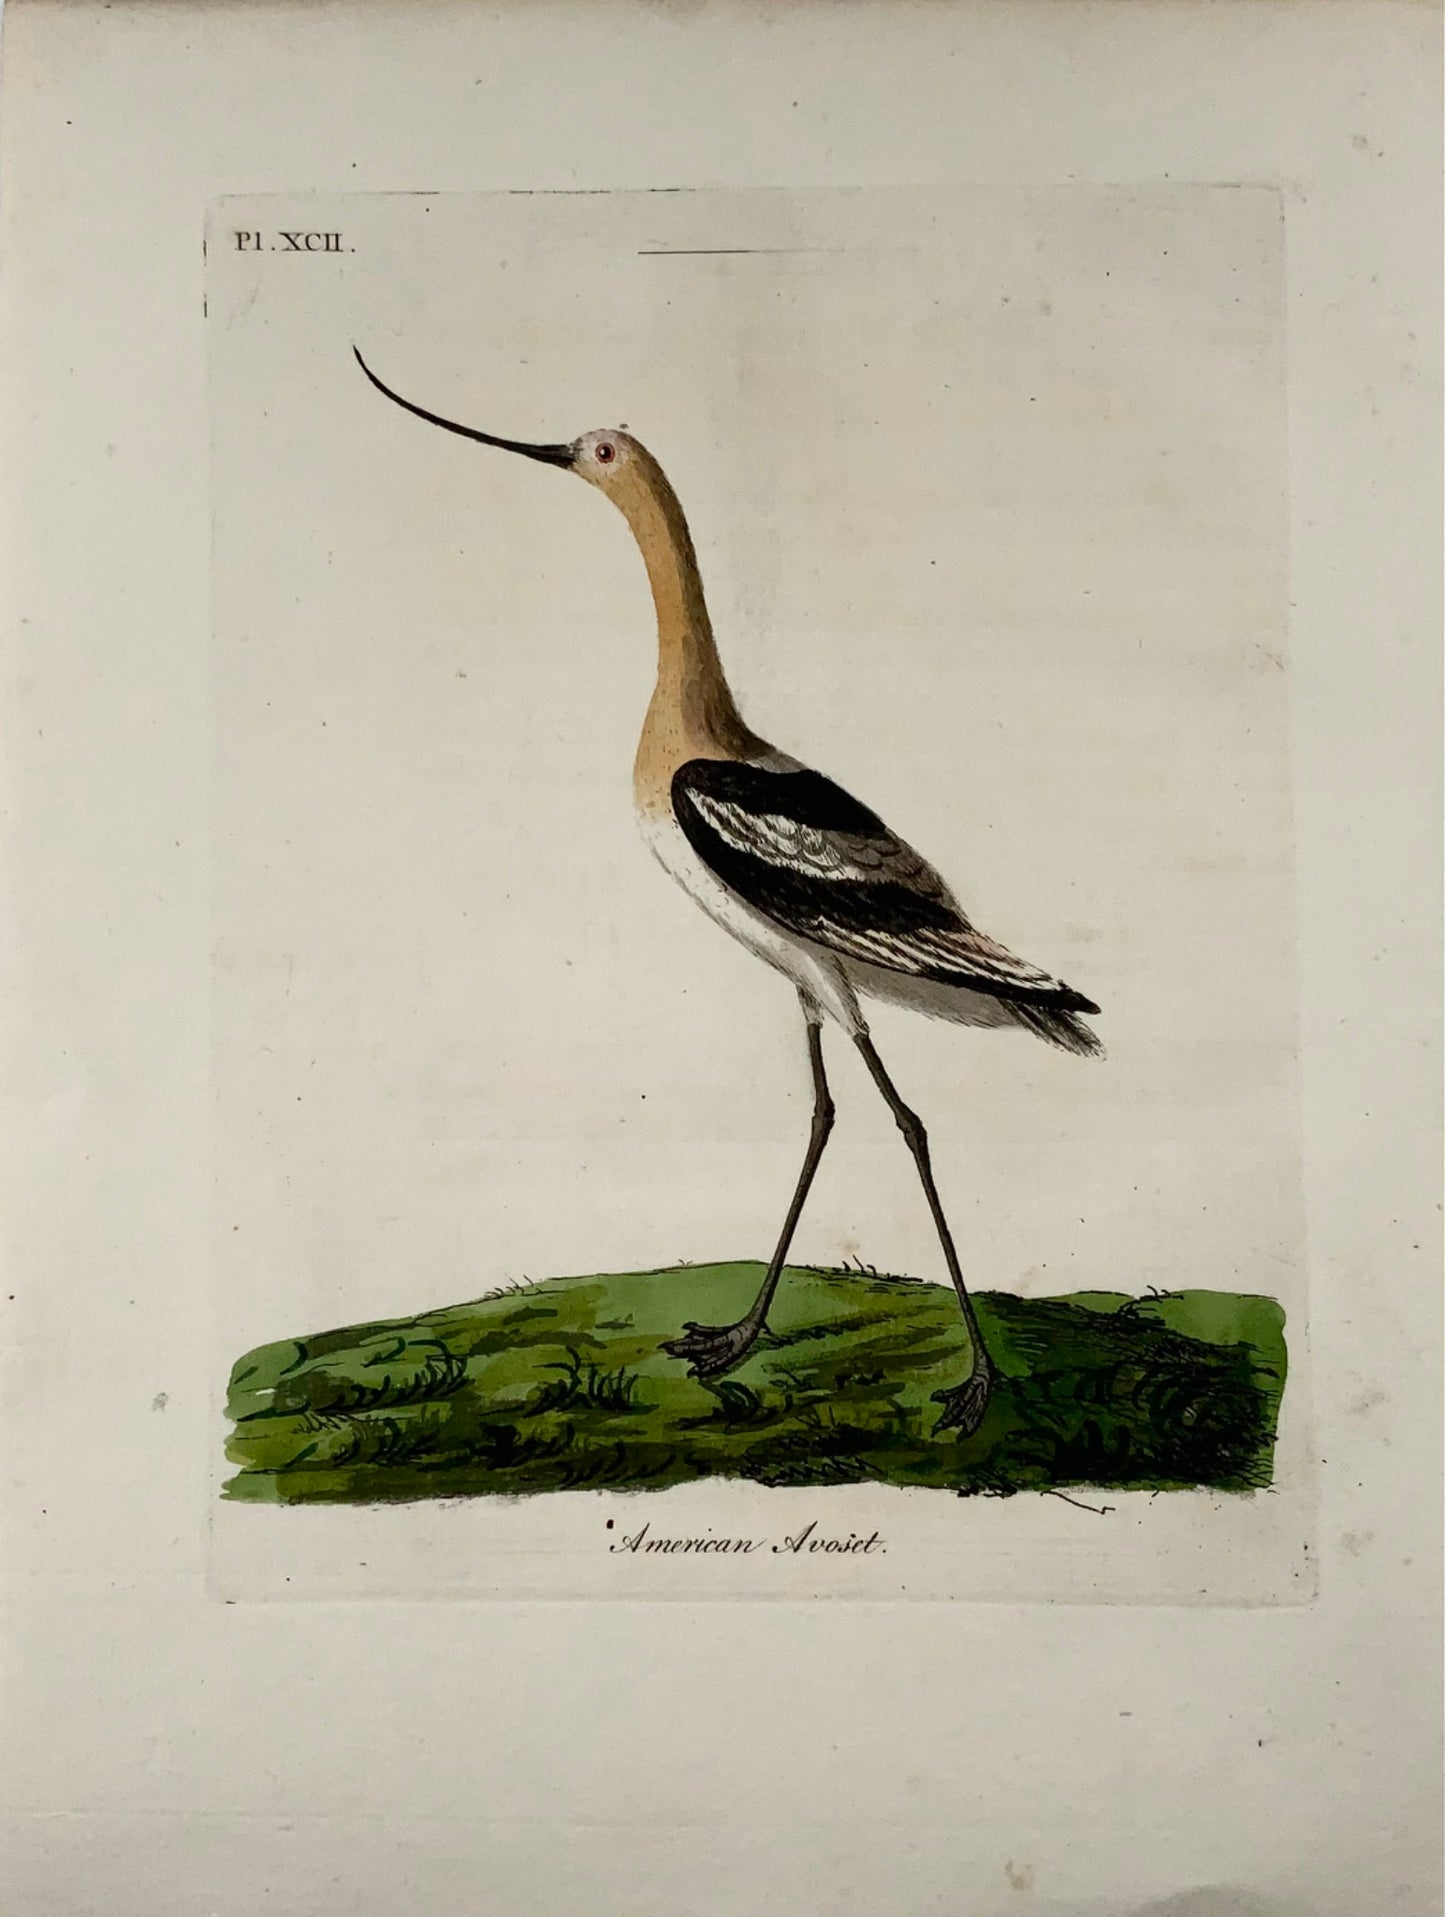 1785 American Avocet, John Latham, quarto, ornithology, hand coloured engraving